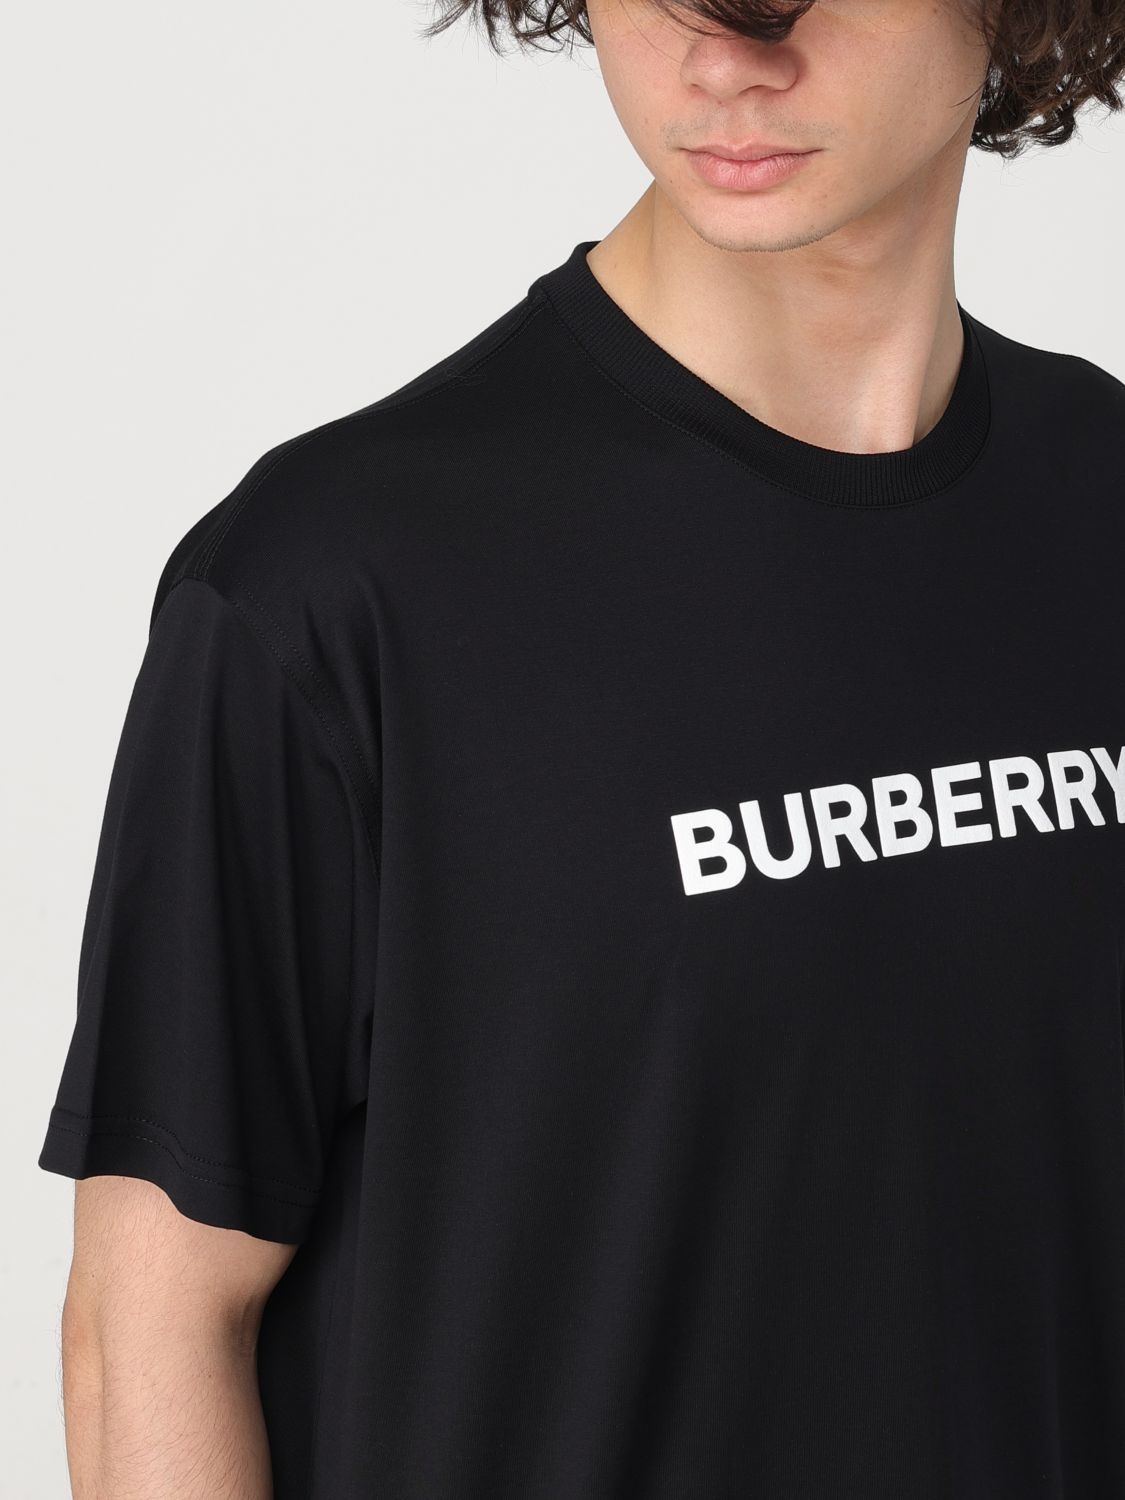 Burberry t-shirt for man - 5